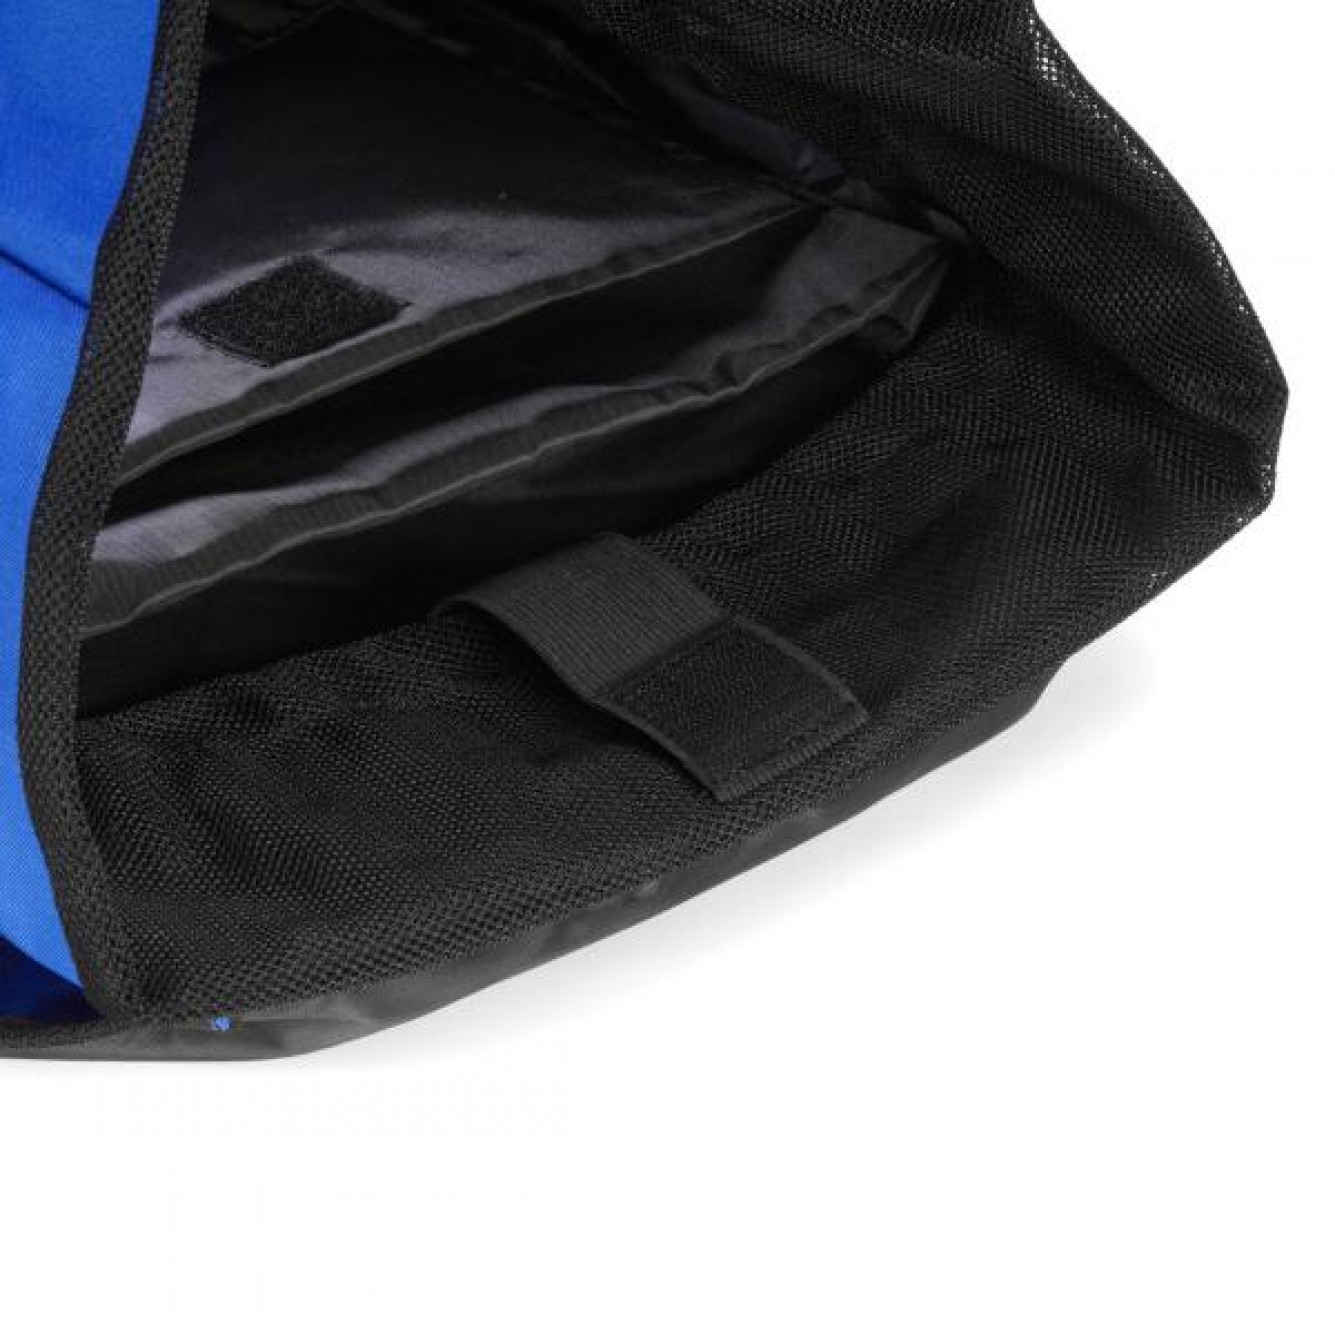 Yamaha | Backpack Vella Blauw